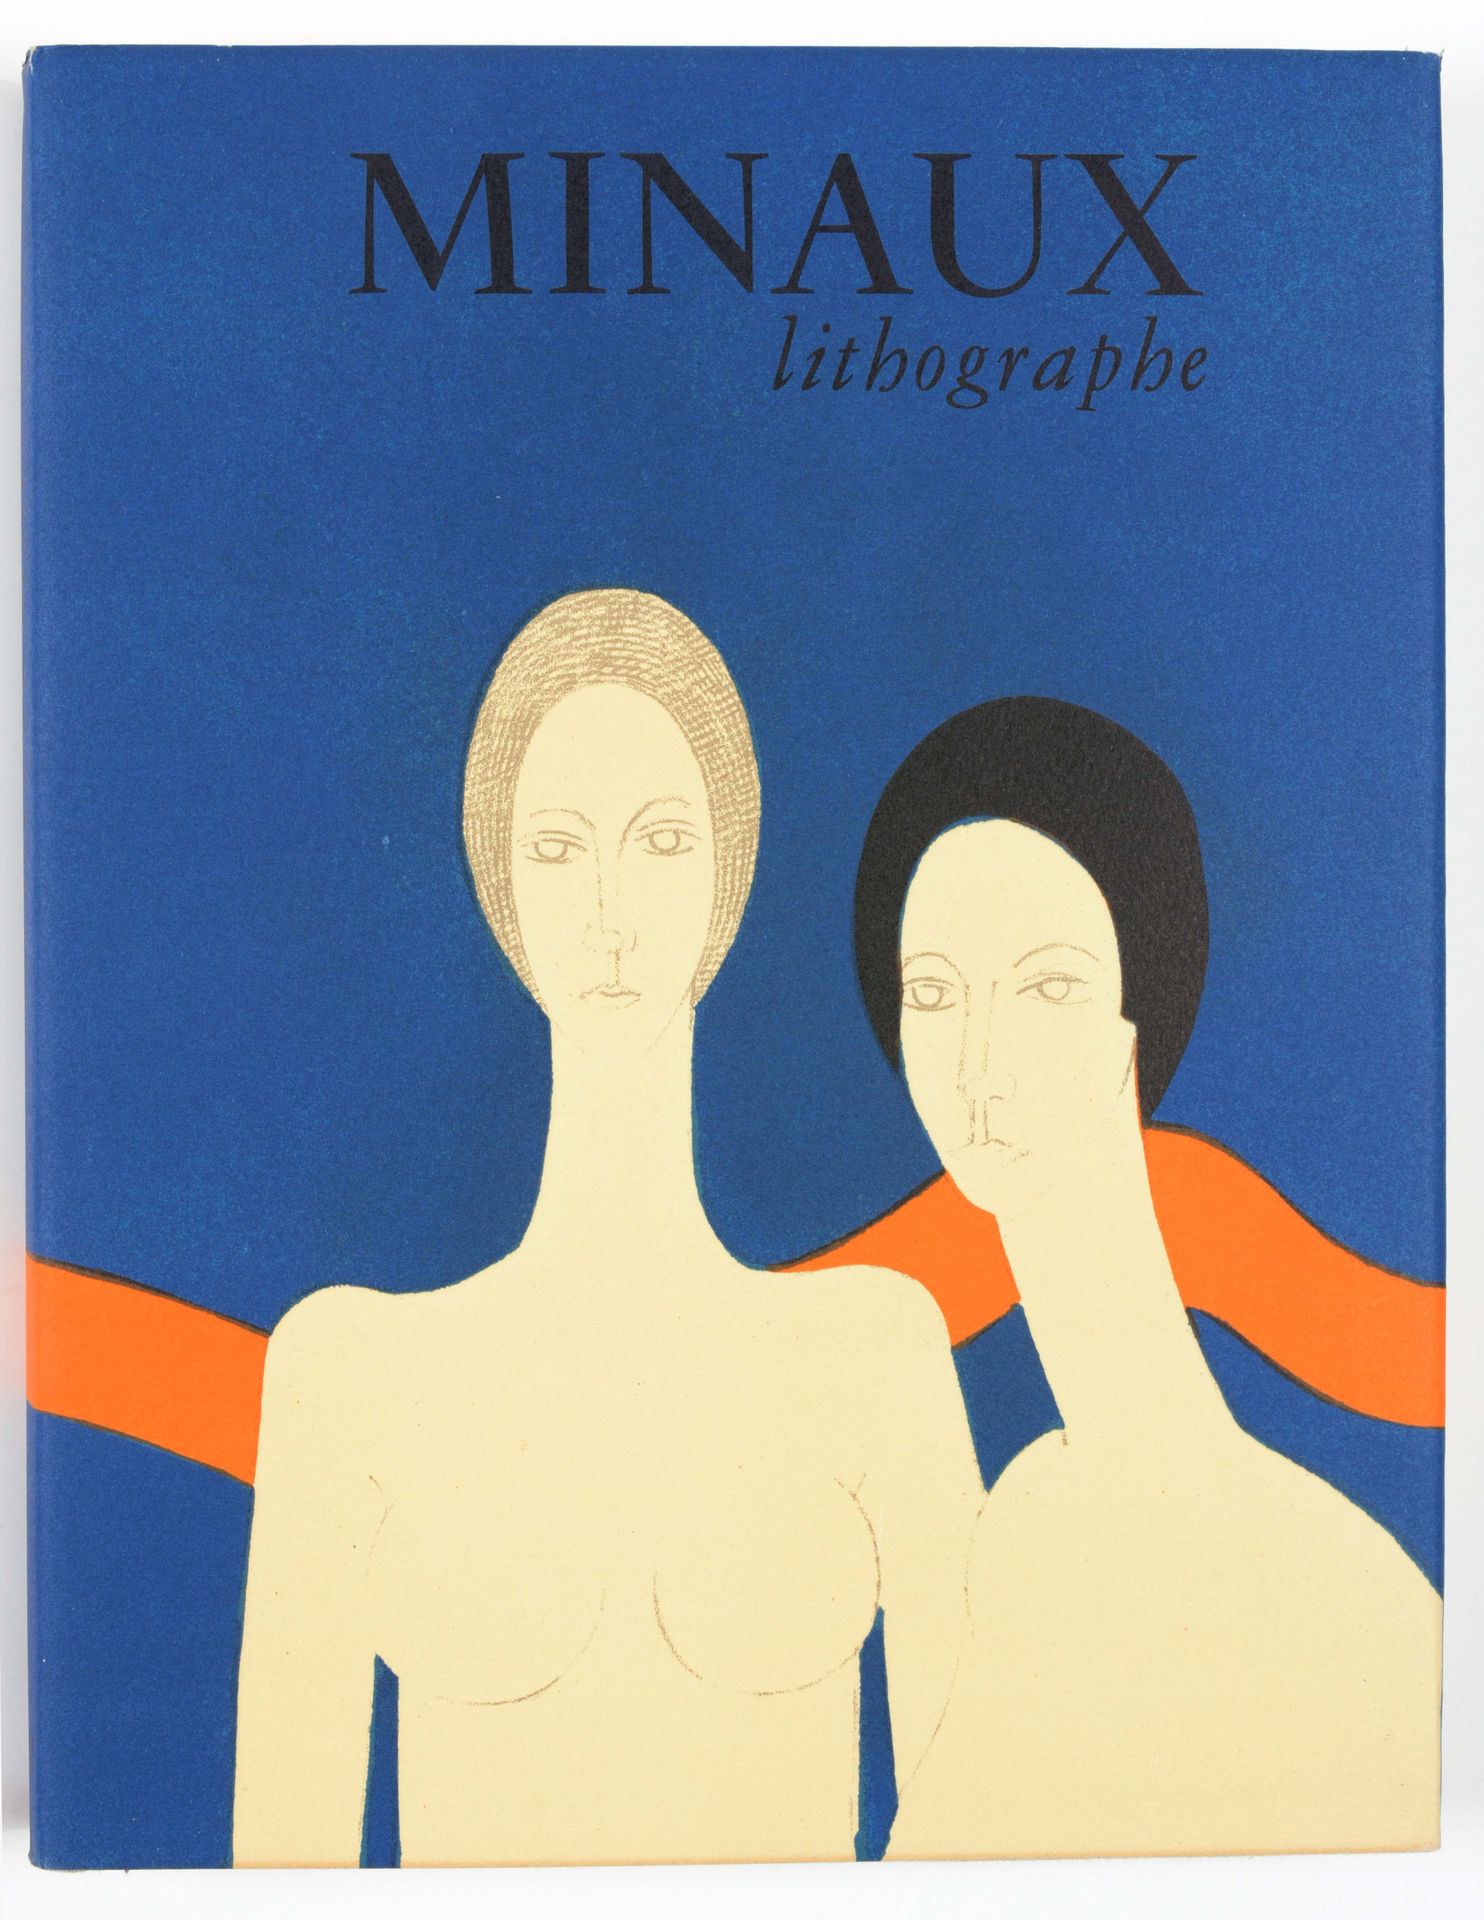 [MINAUX] SORLIER, Charles Minaux litografo 1948-1973

Gr. In-4°, 207 pp, con 6 L&hellip;